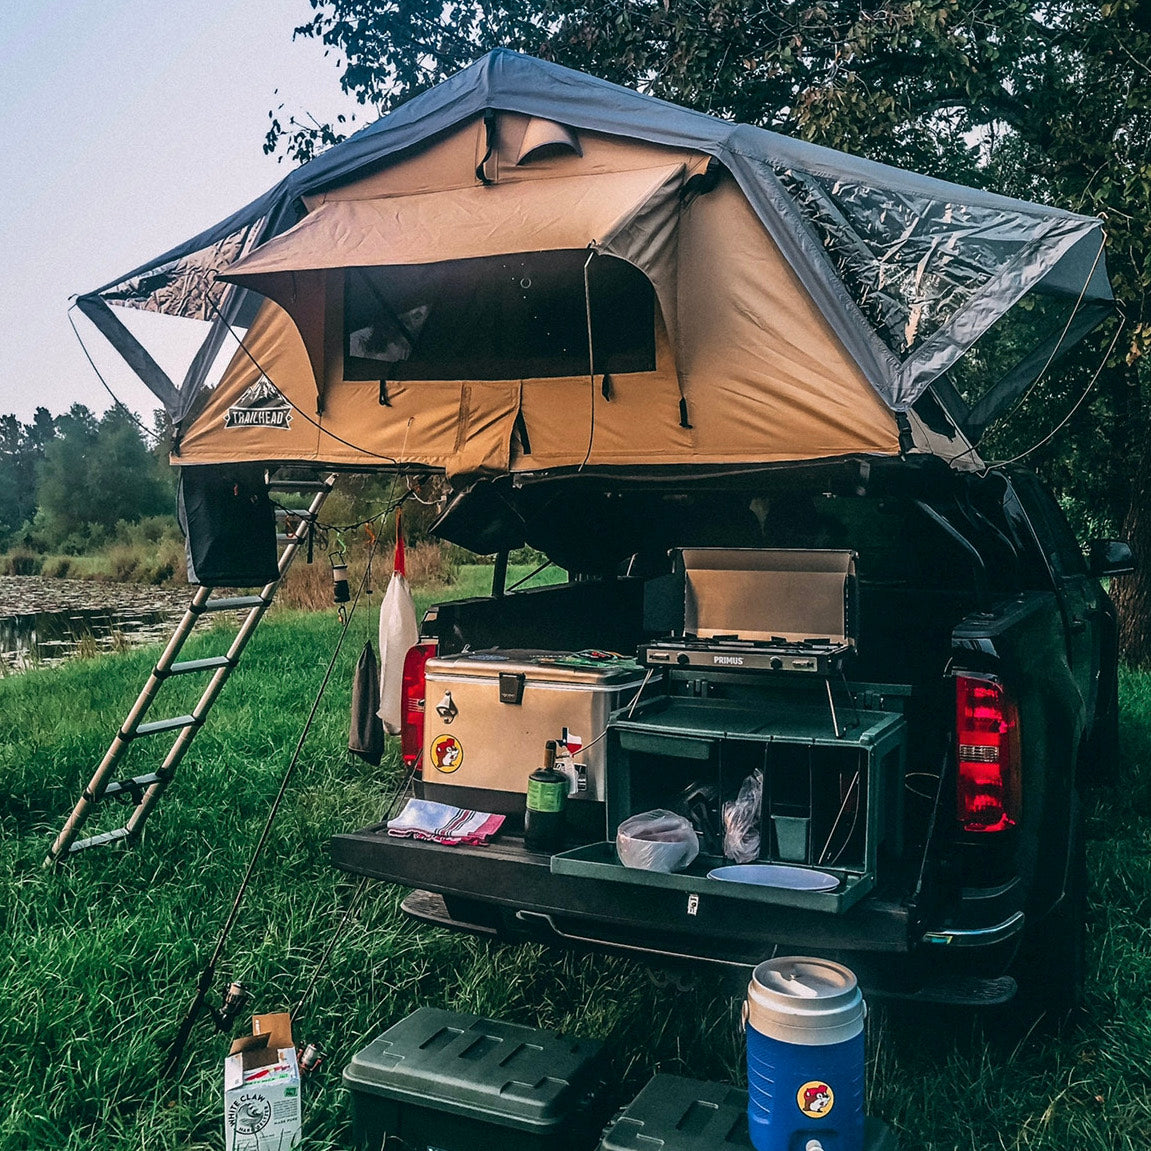 76 Campingbox ideas  van camping, camping box, camper